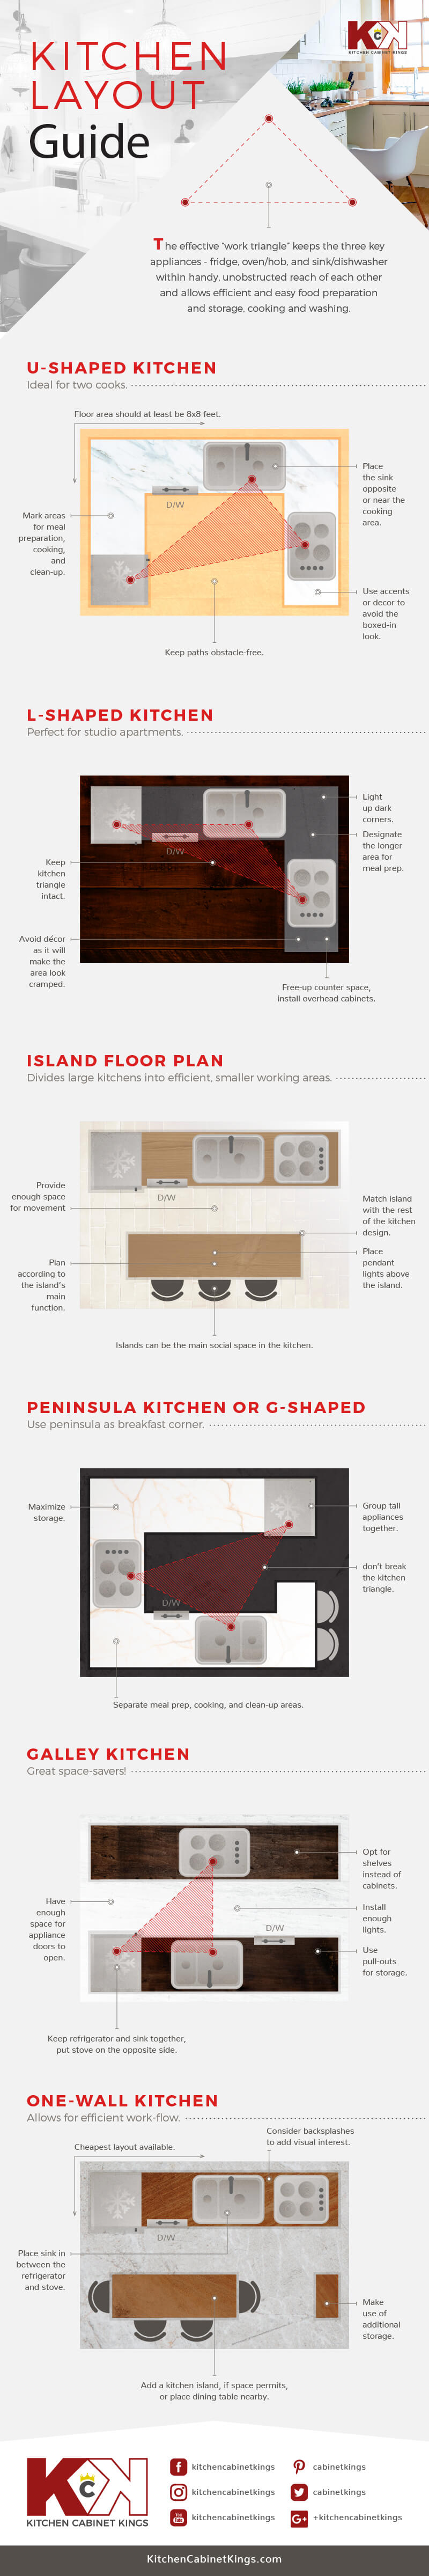 Kitchen Layout Cheat Sheet [Infographic]